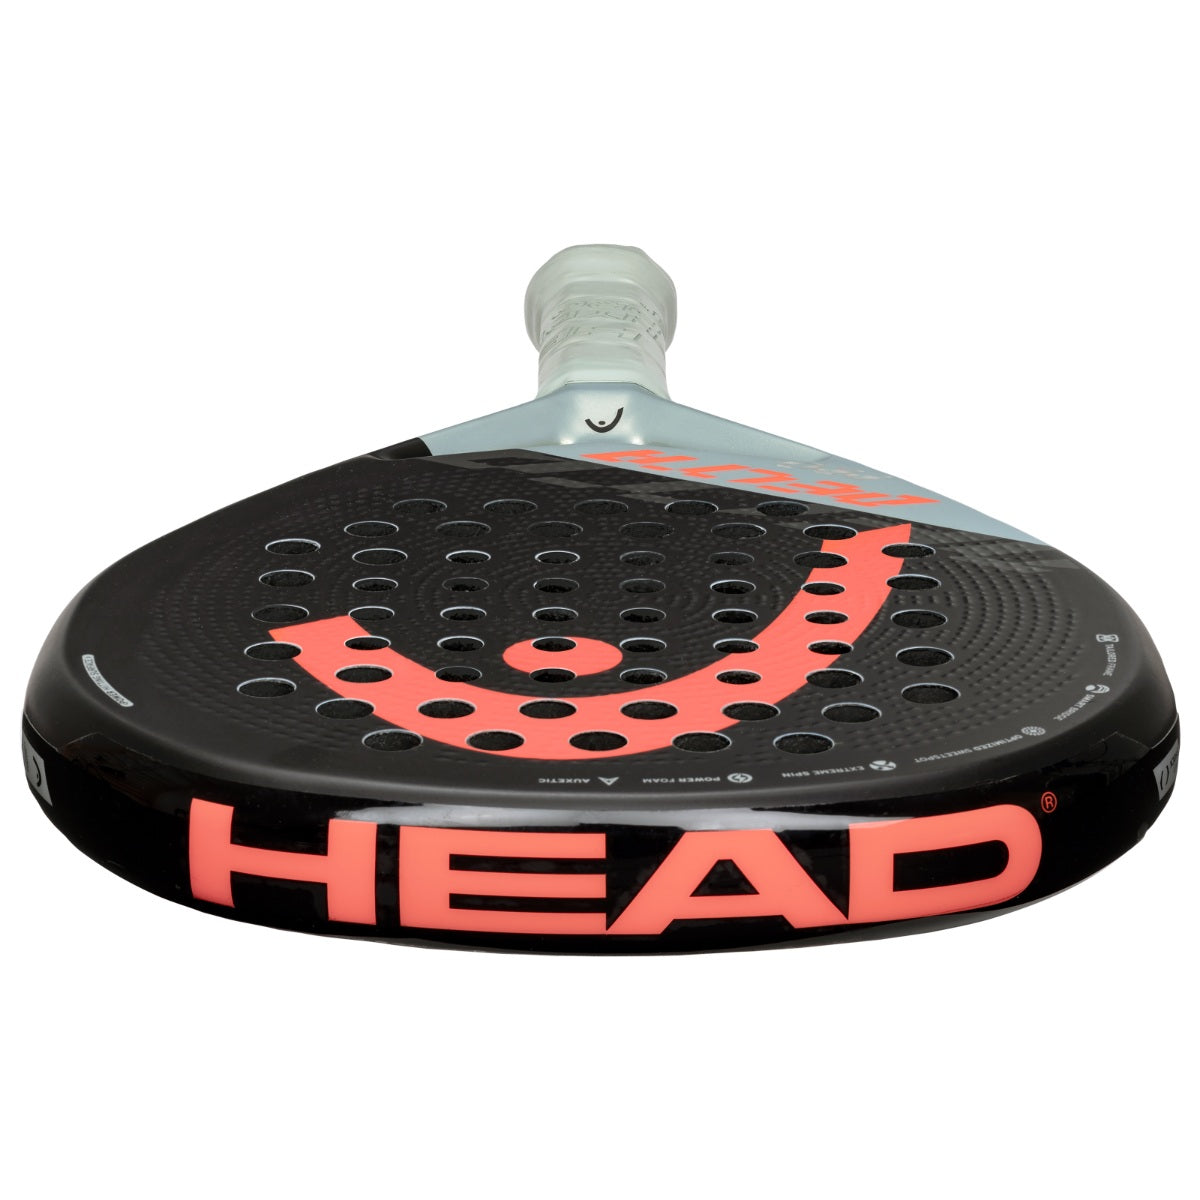 THE HEAD DELTA PRO WINS BEST POWER RACQUET AT THE PADEL RACQUET AWARDS –  HEAD